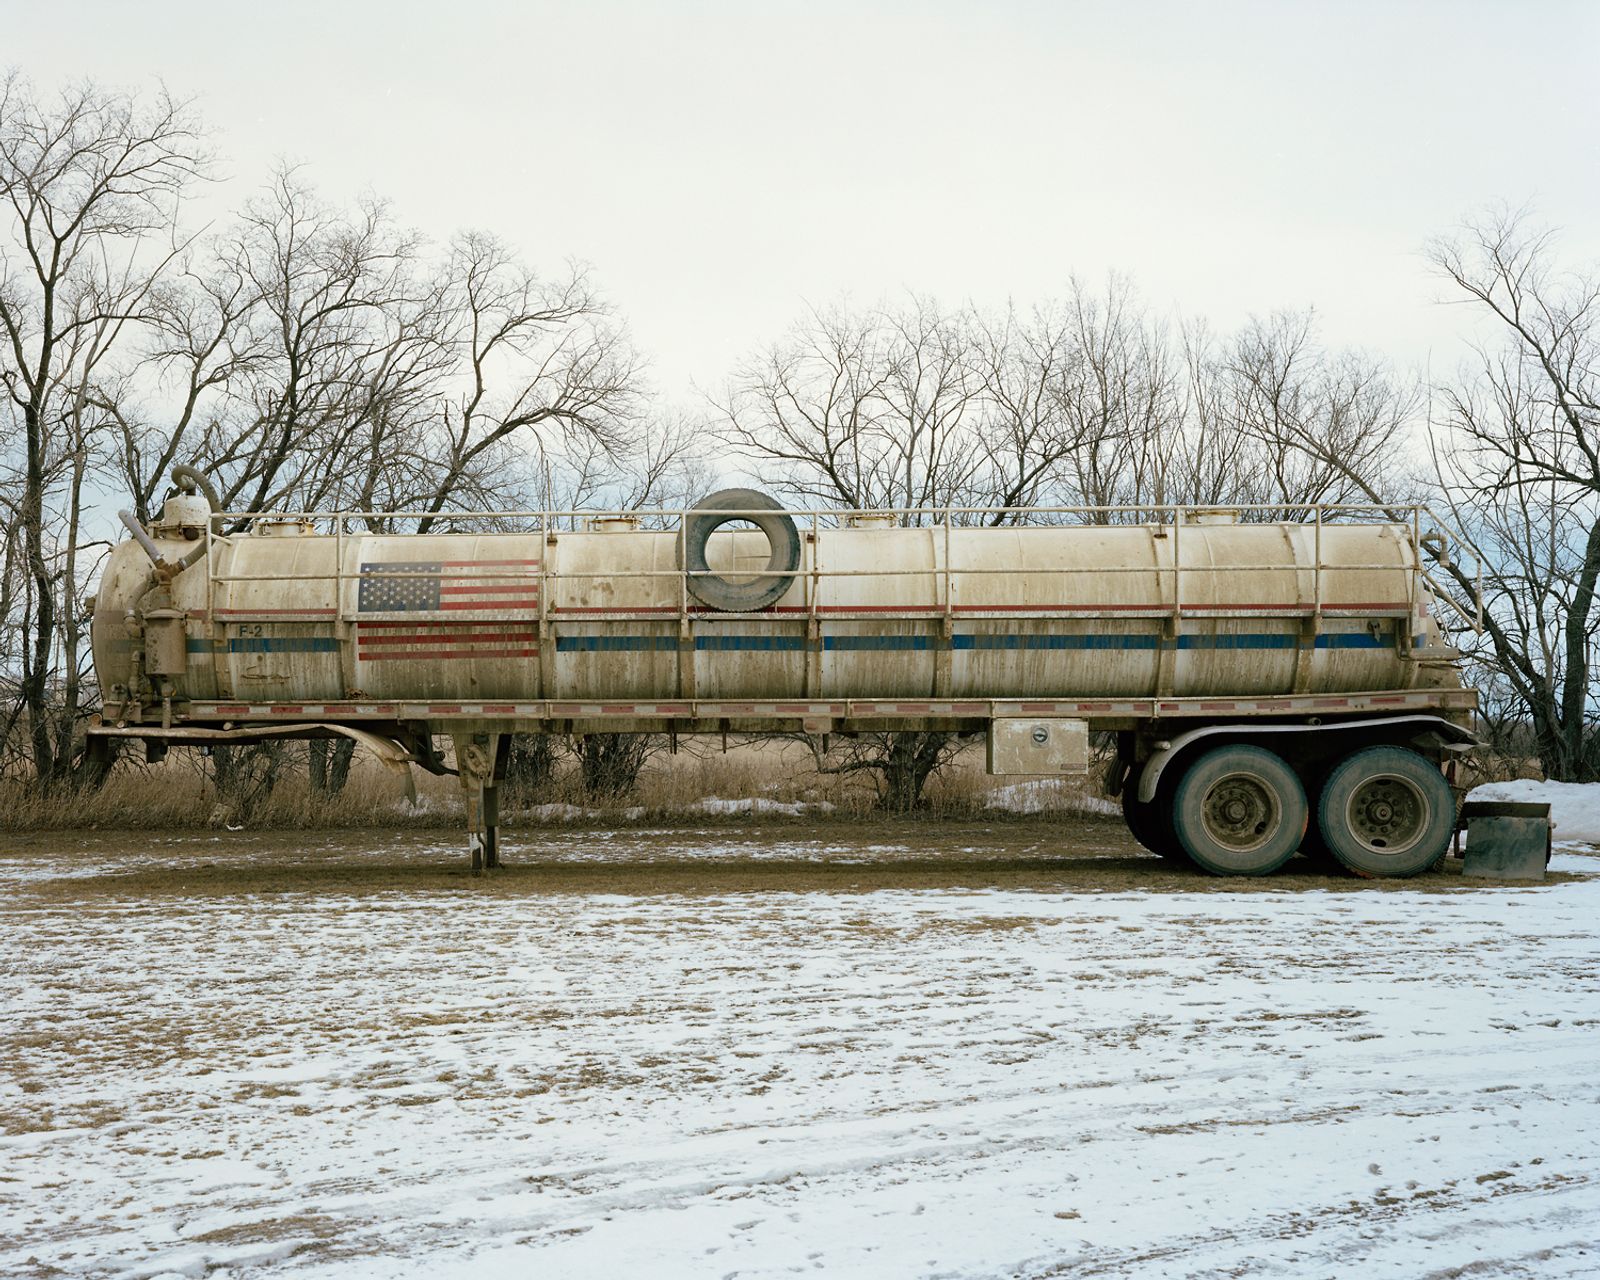 © Sarah Christianson - Oil tanker north of Williston, February 2016.